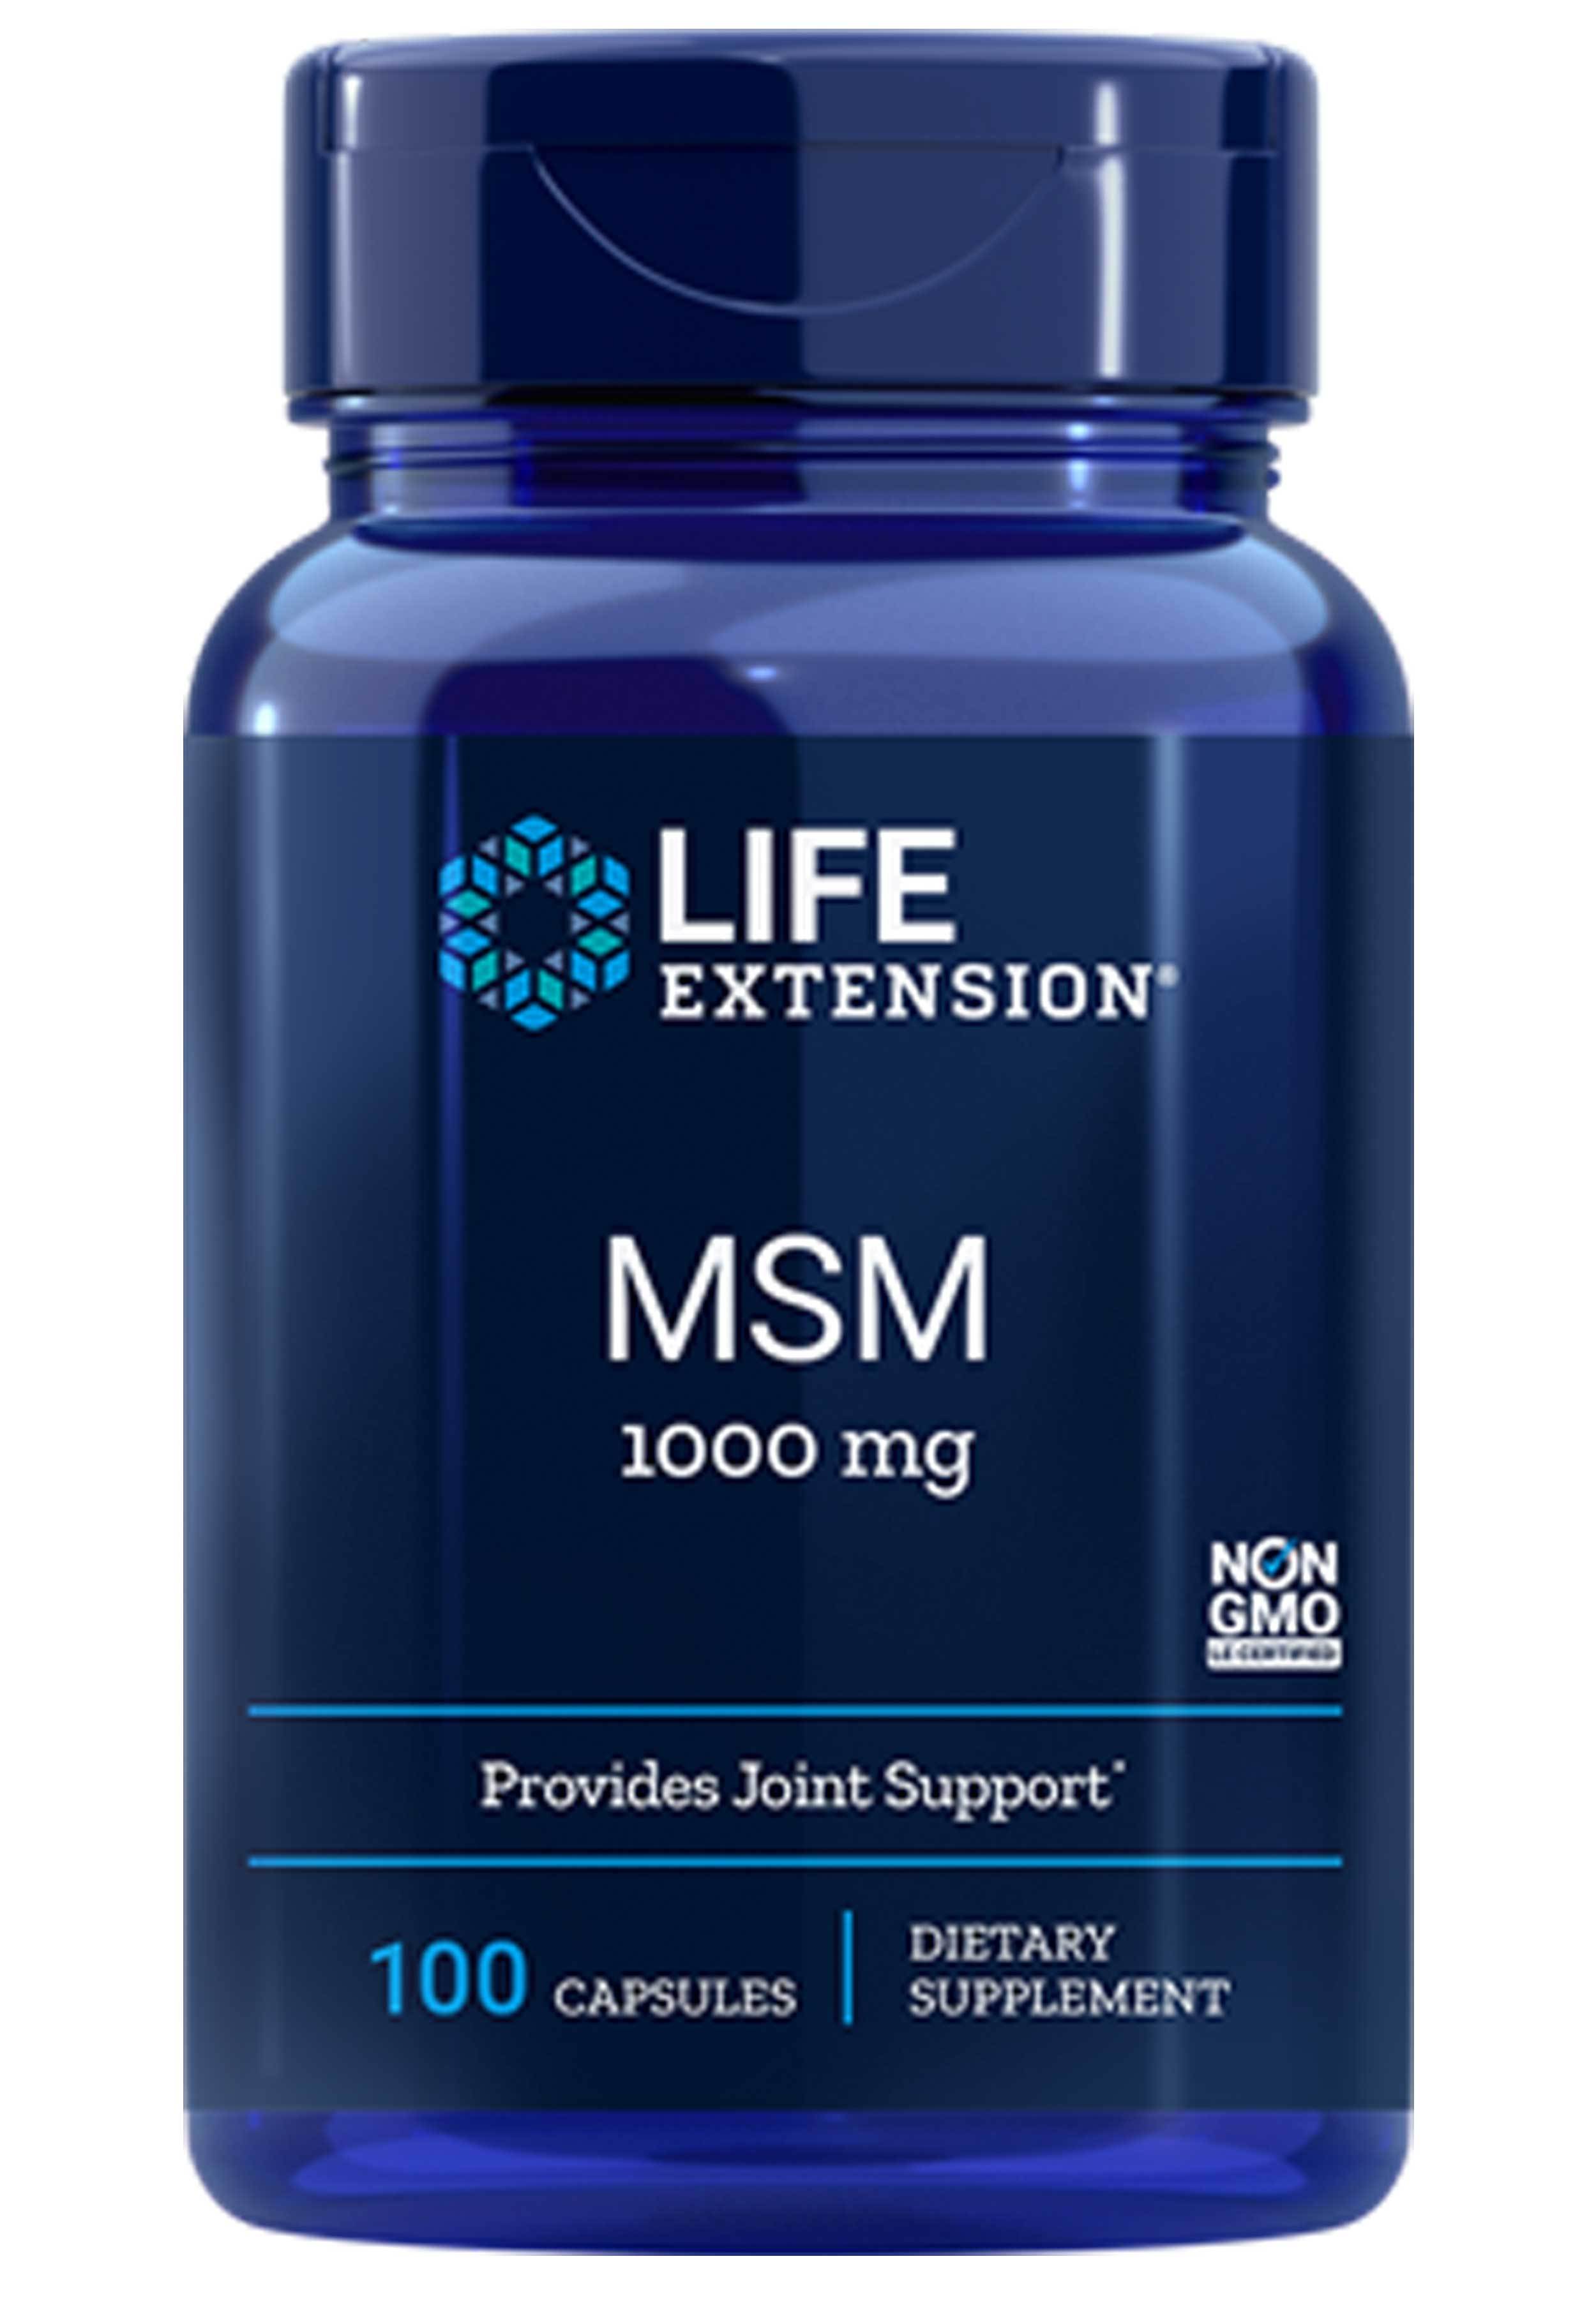 Life Extension MSM